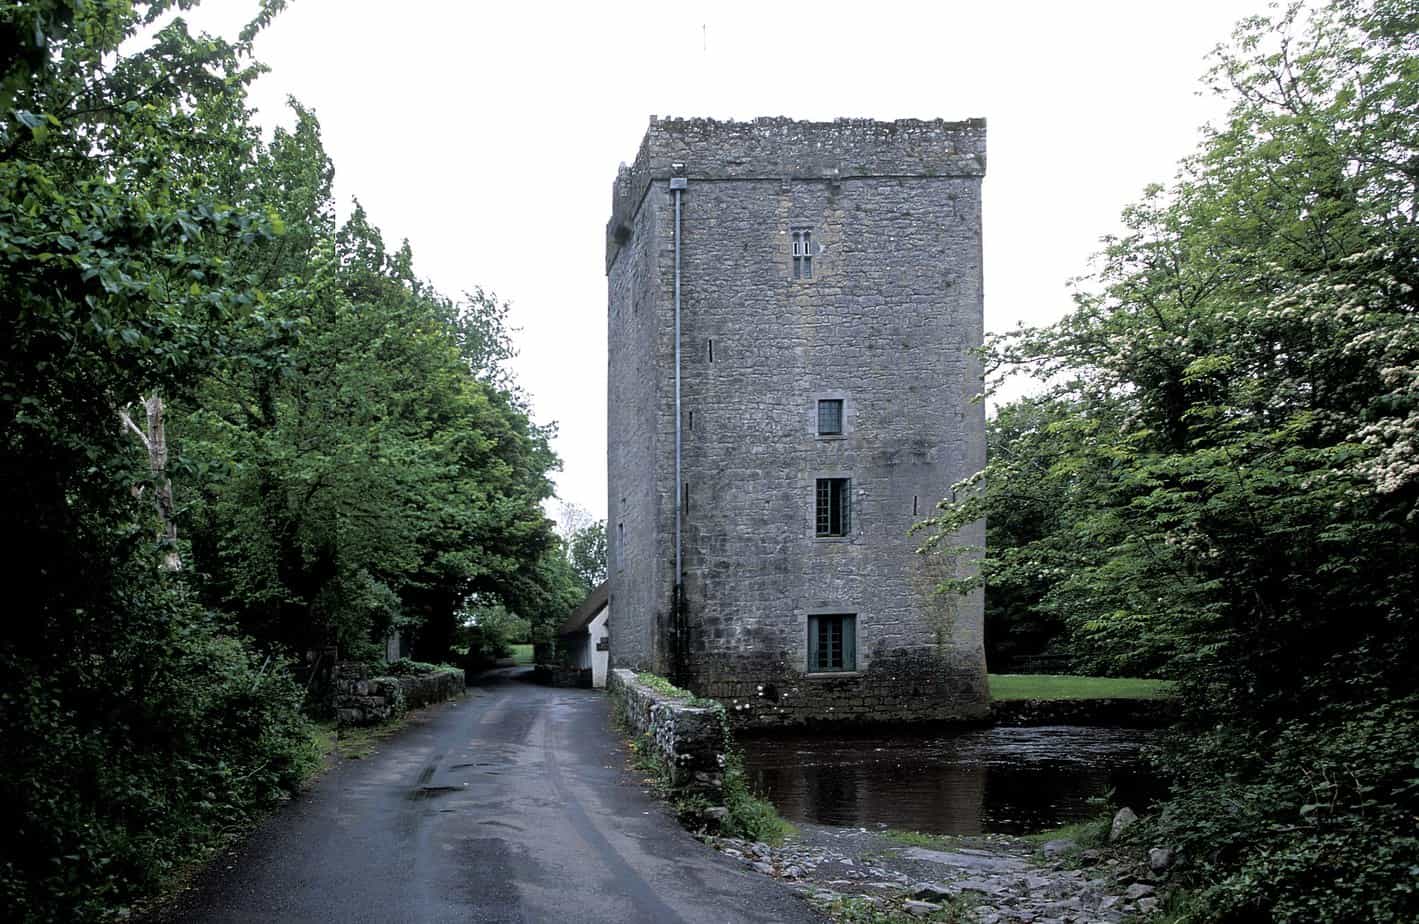 Thoor Ballylee in County Galway.